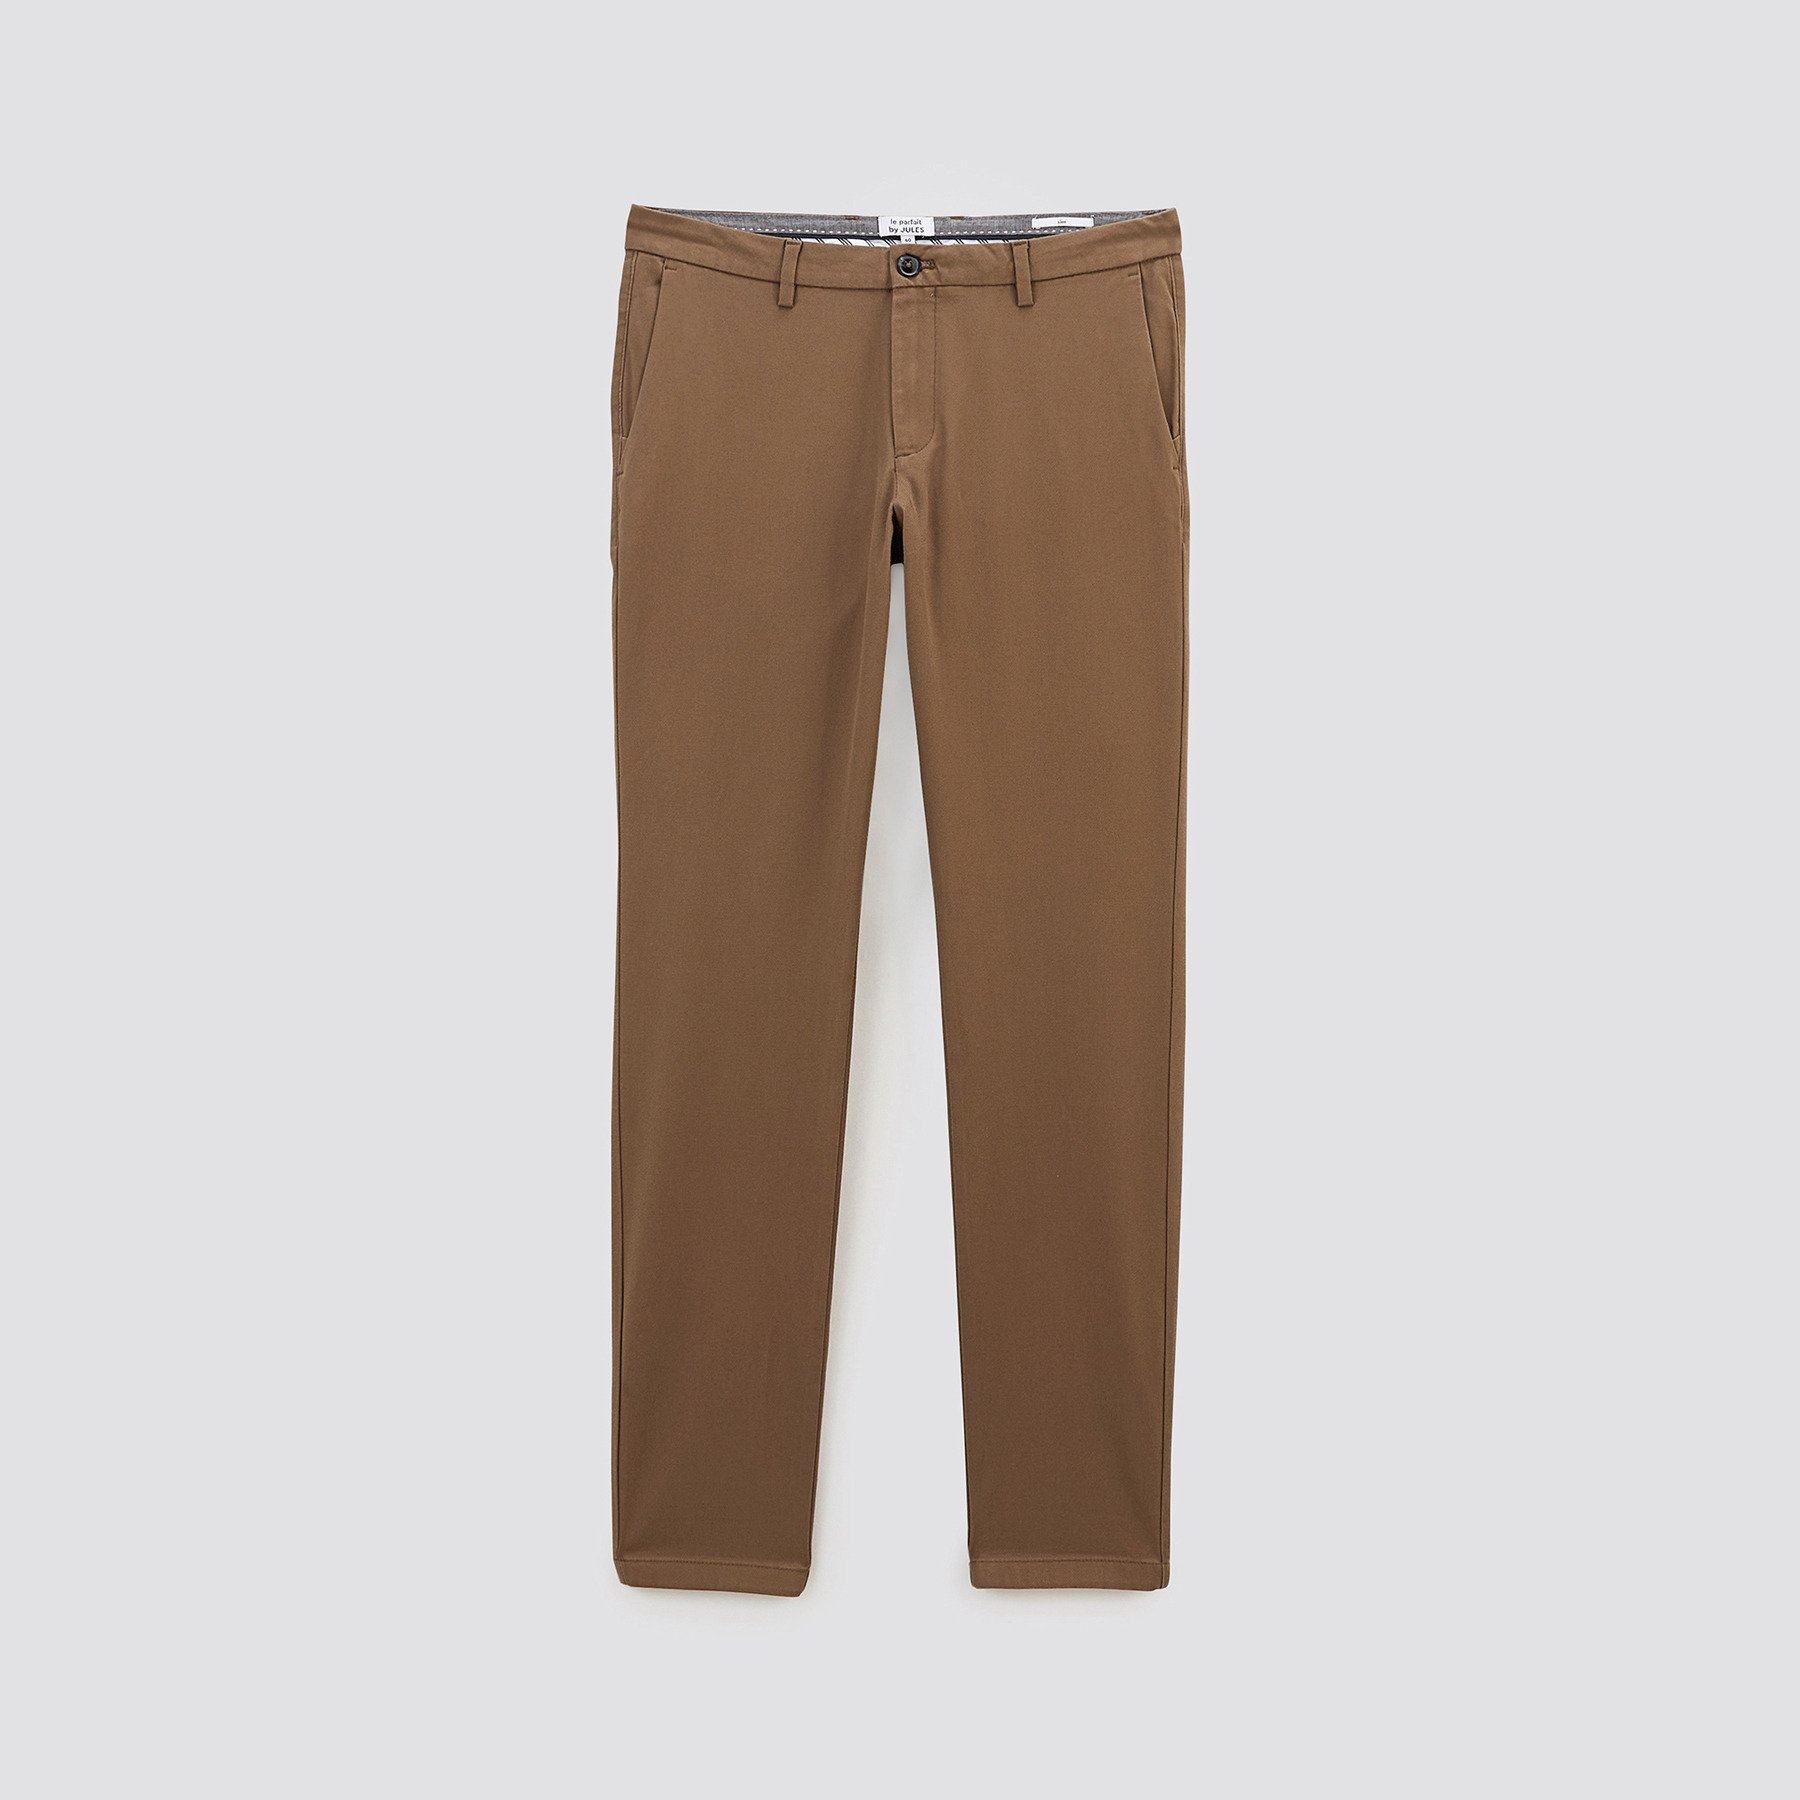 Pantalon chino slim urbain "le parfait by JULES" Marron 34 98% Coton, 2% Elasthanne Homme